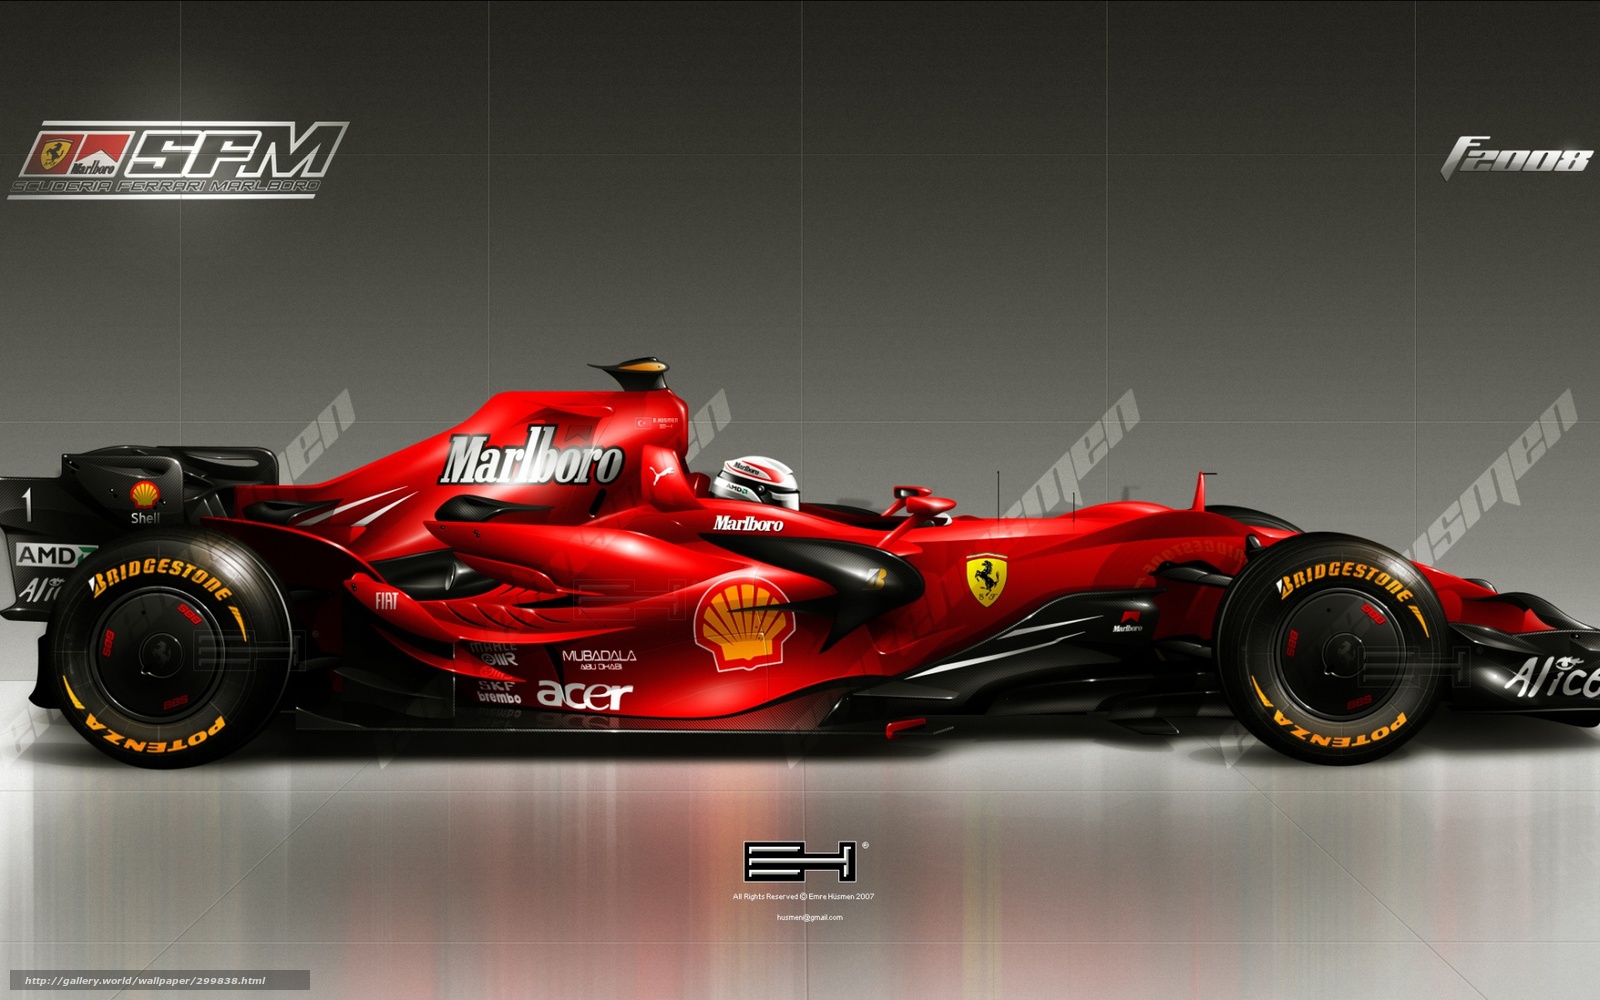 Wallpaper Ferrari Formula Fireball Malboro Desktop